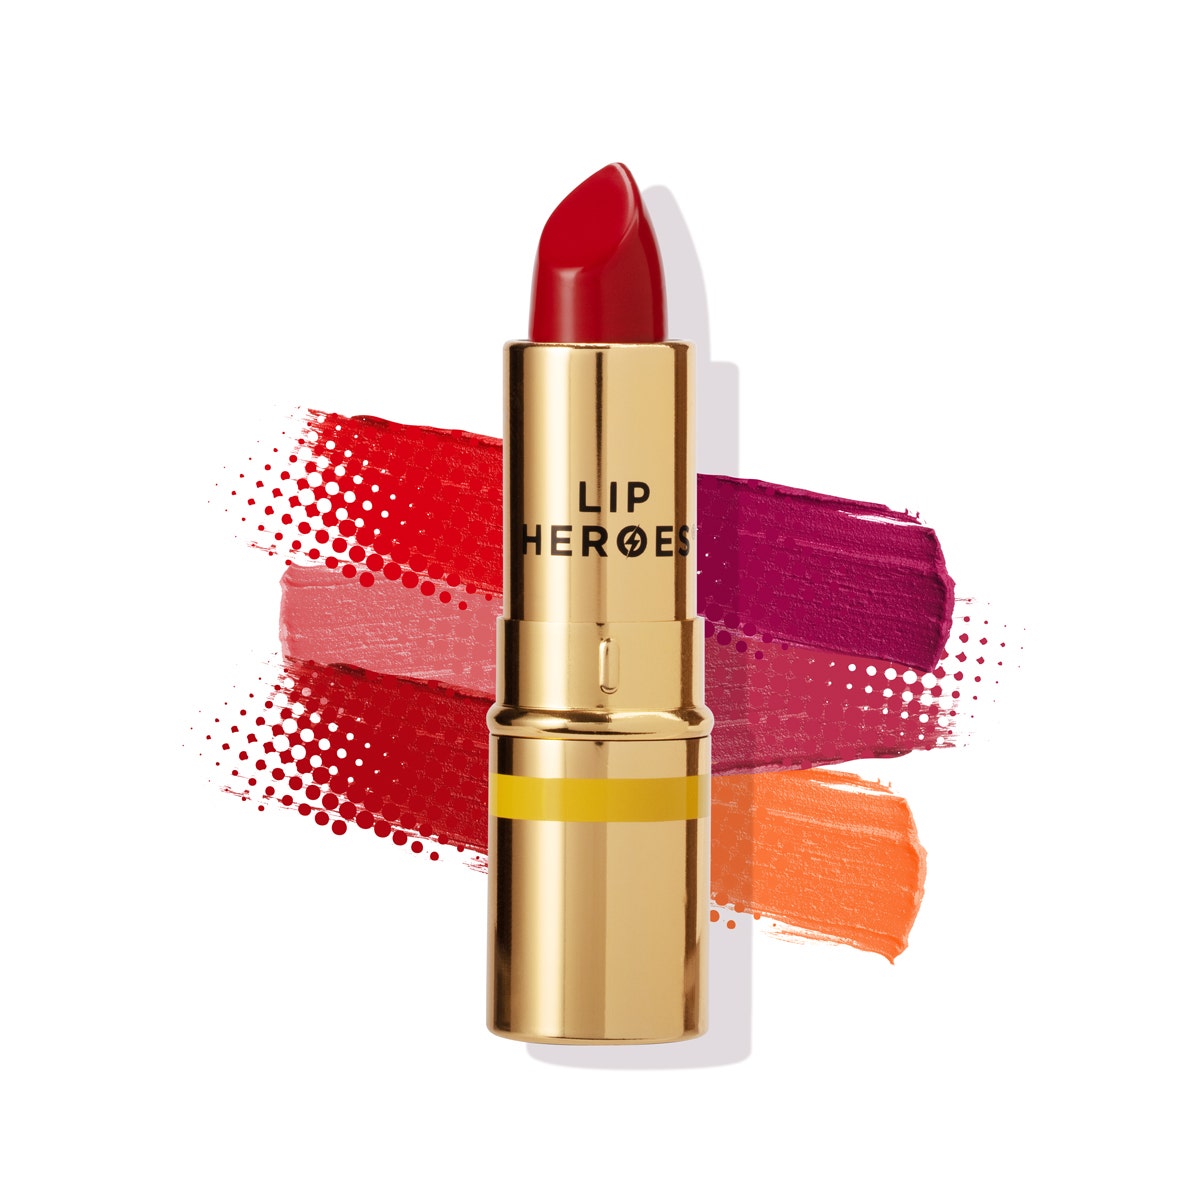 Lip Heroes Lipsticks